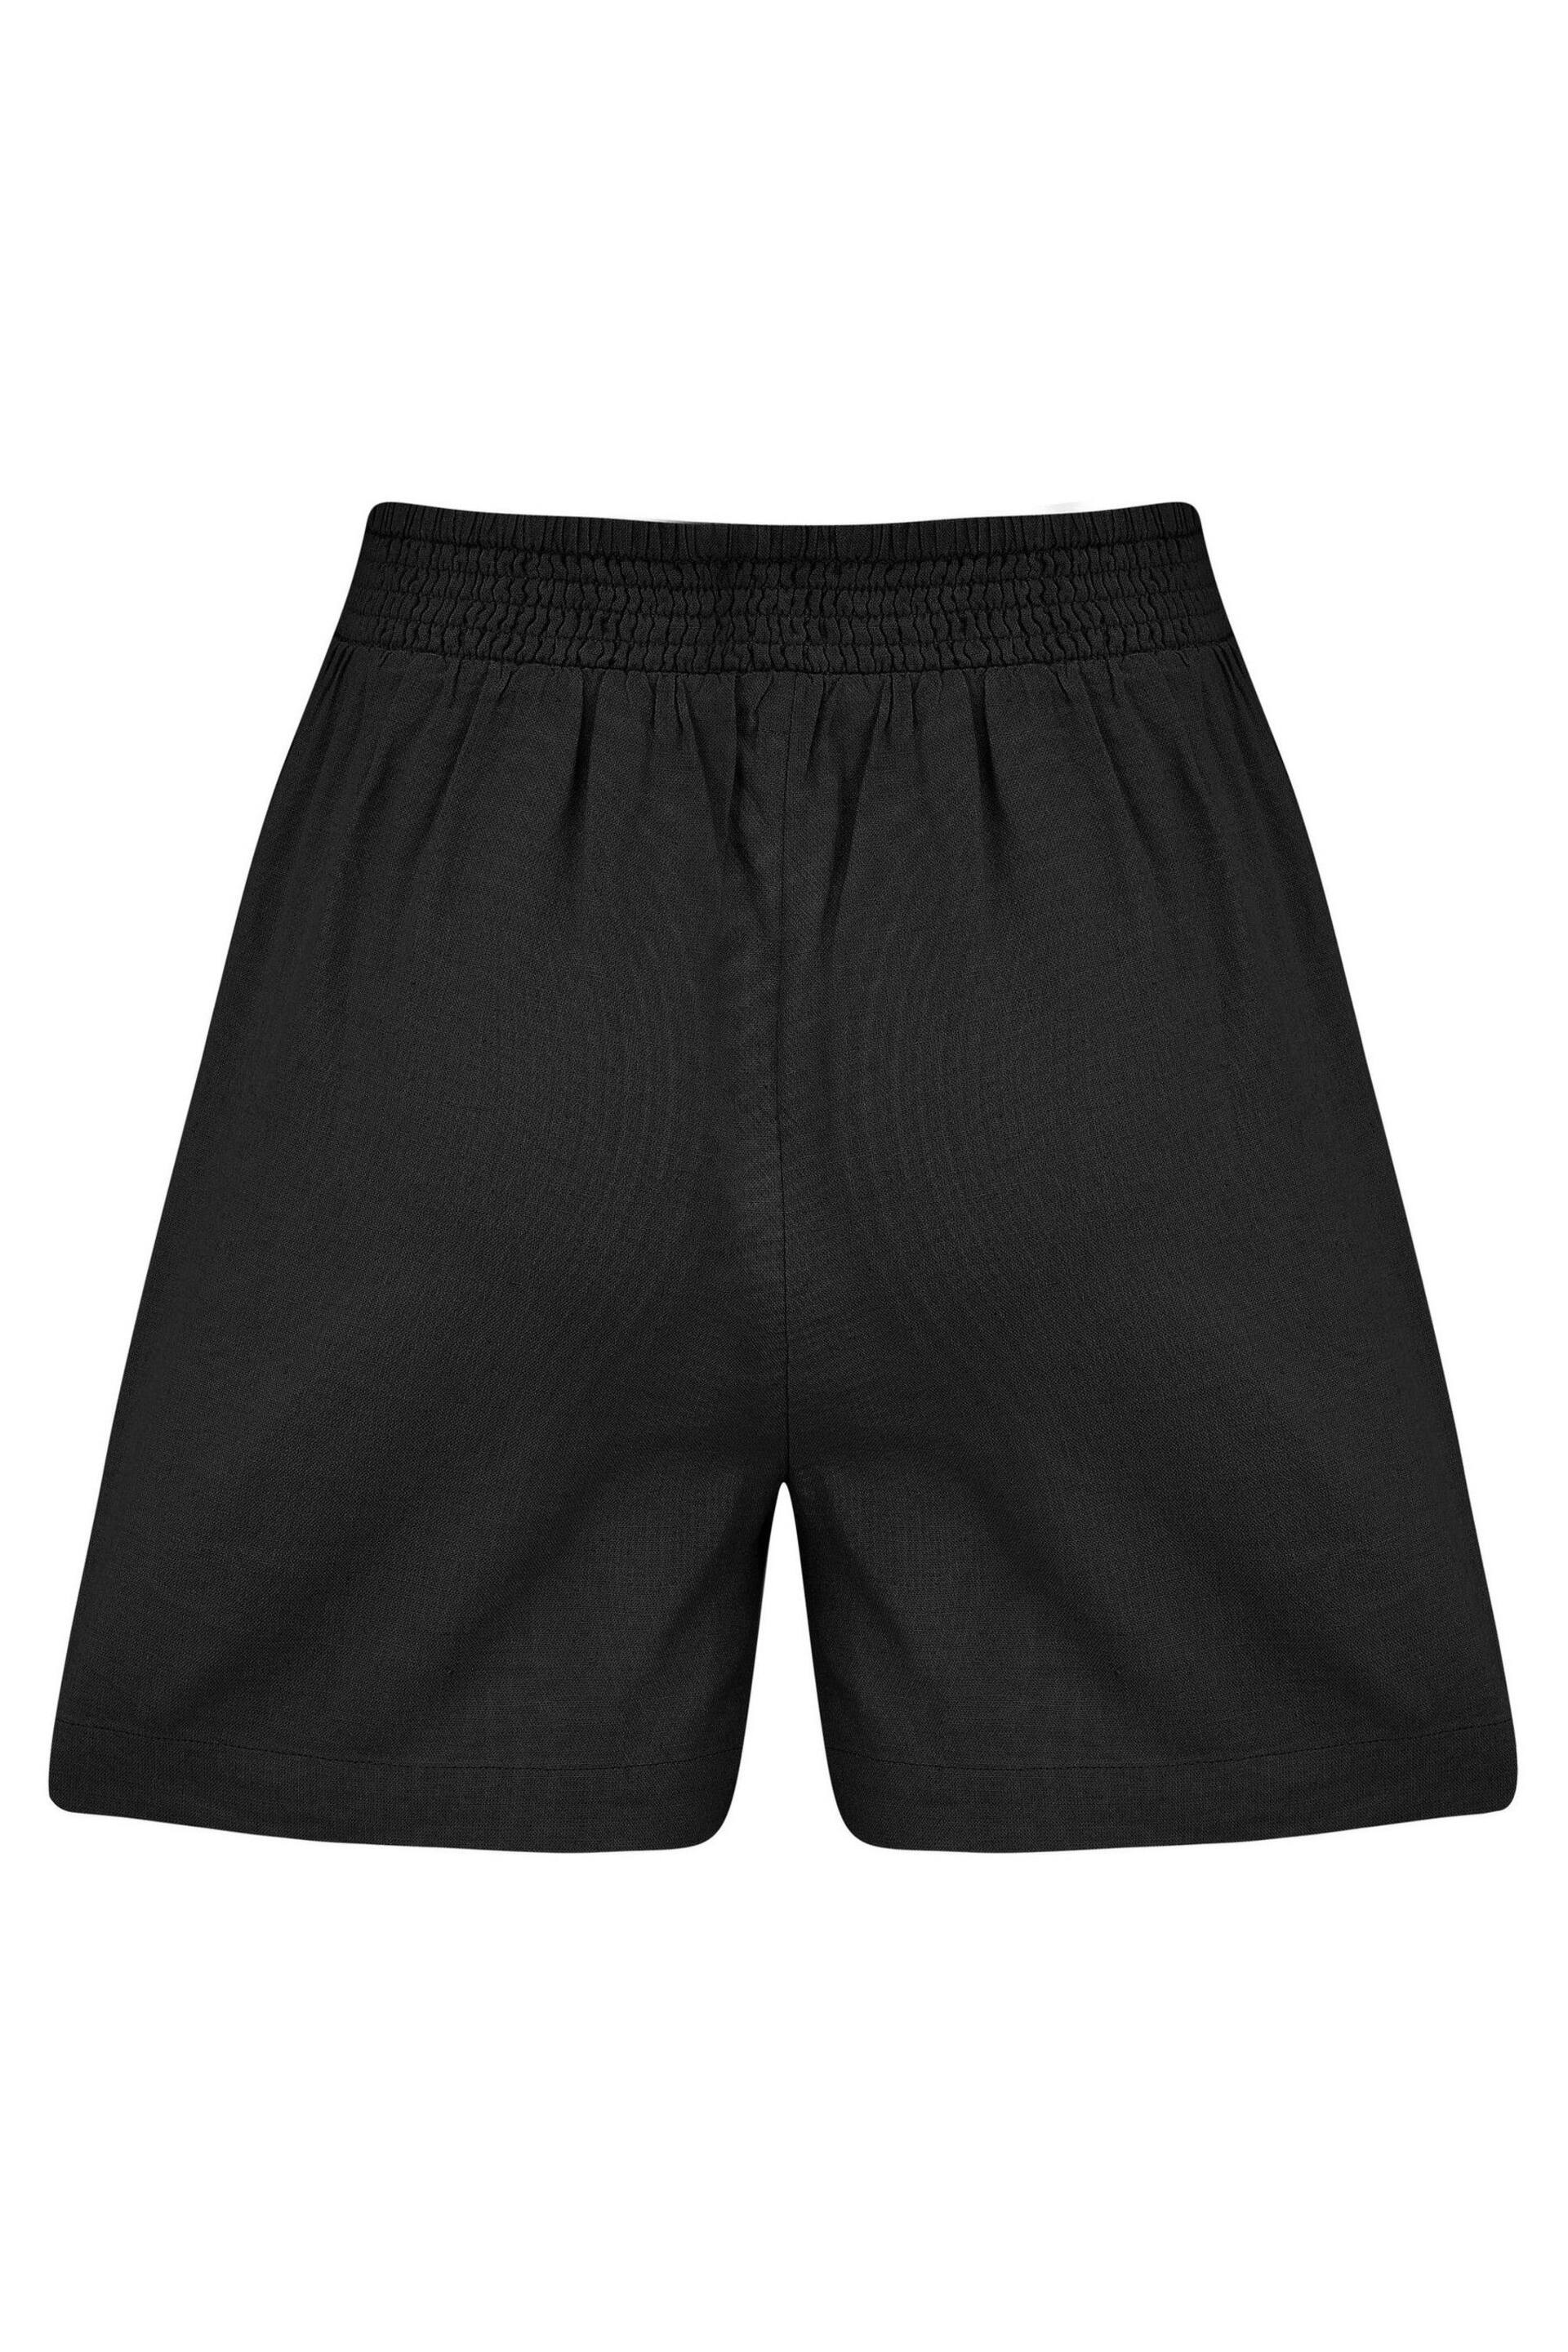 Pour Moi Black Bree High Waist Linen Blend Elasticated Shorts - Image 4 of 4